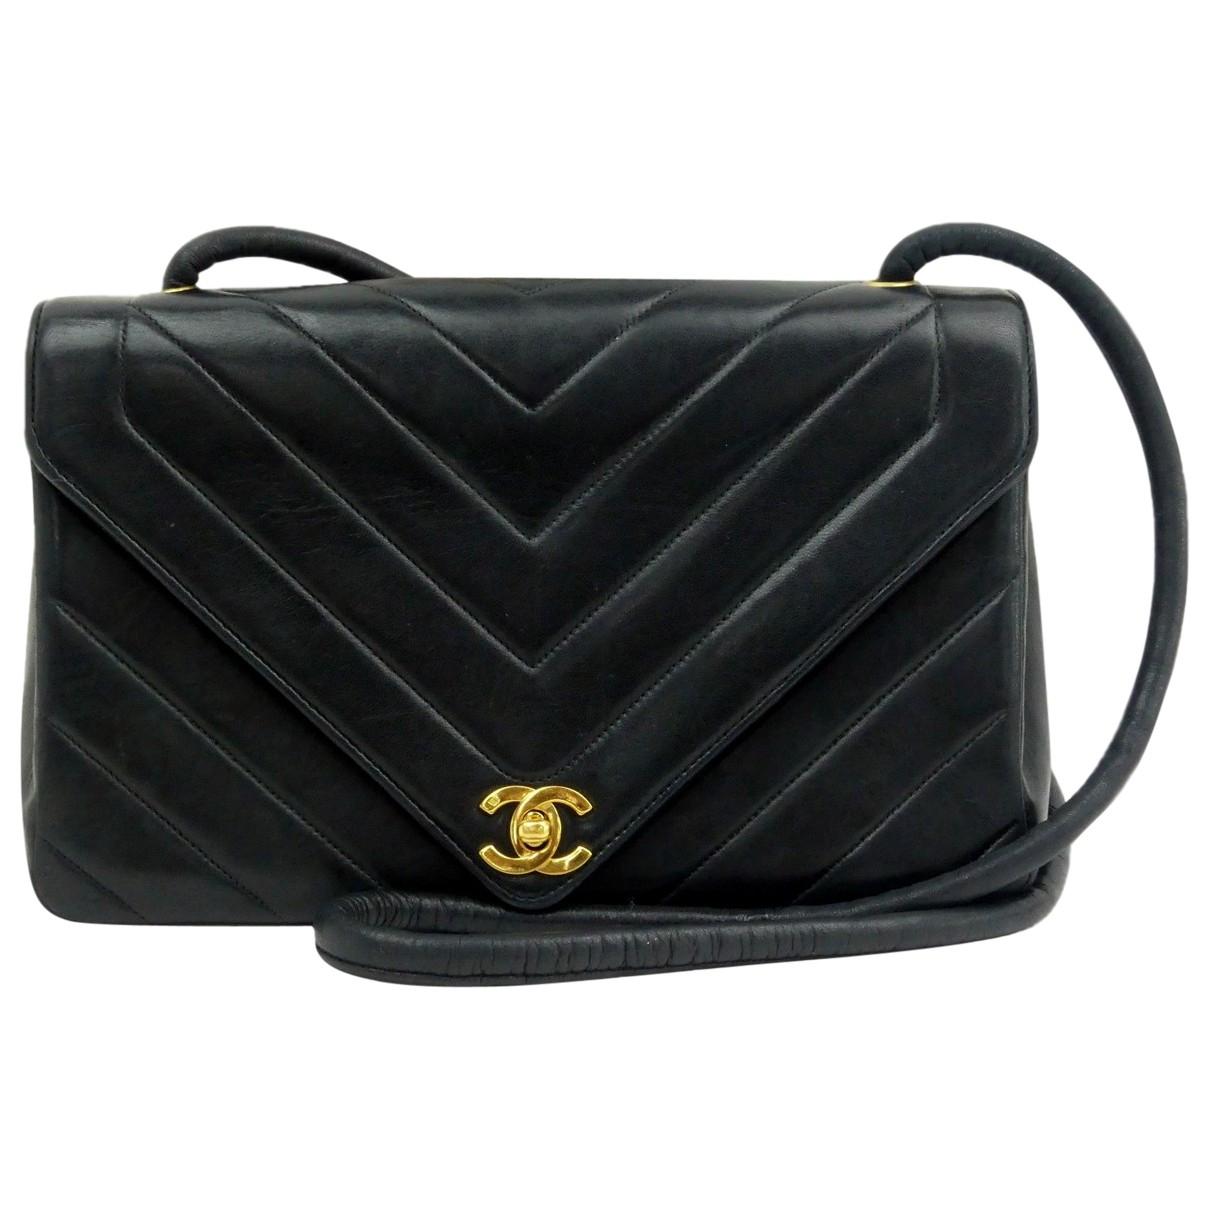 Chanel Leather Crossbody Bag in Black - Lyst